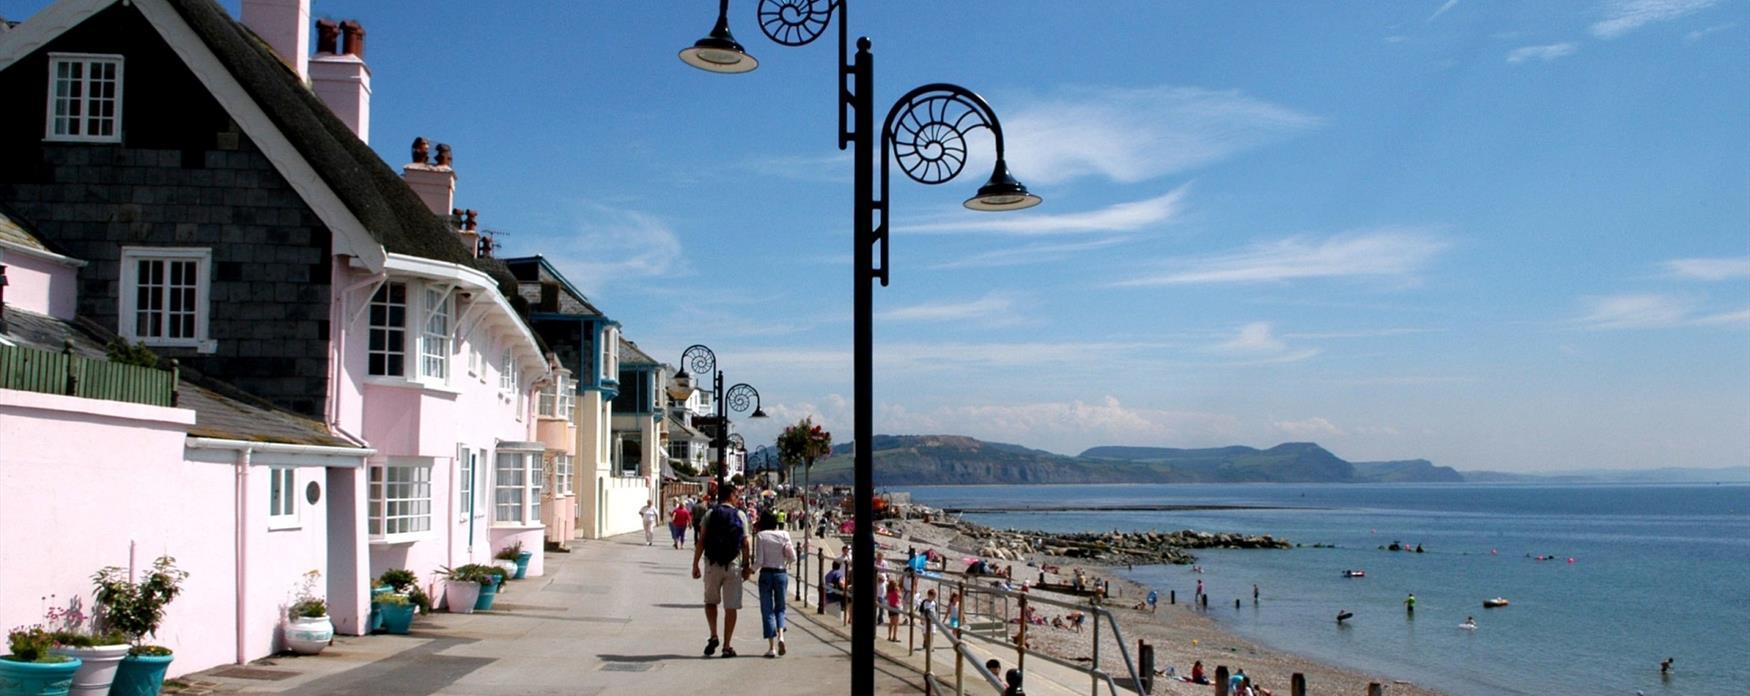 Lyme Regis promenade